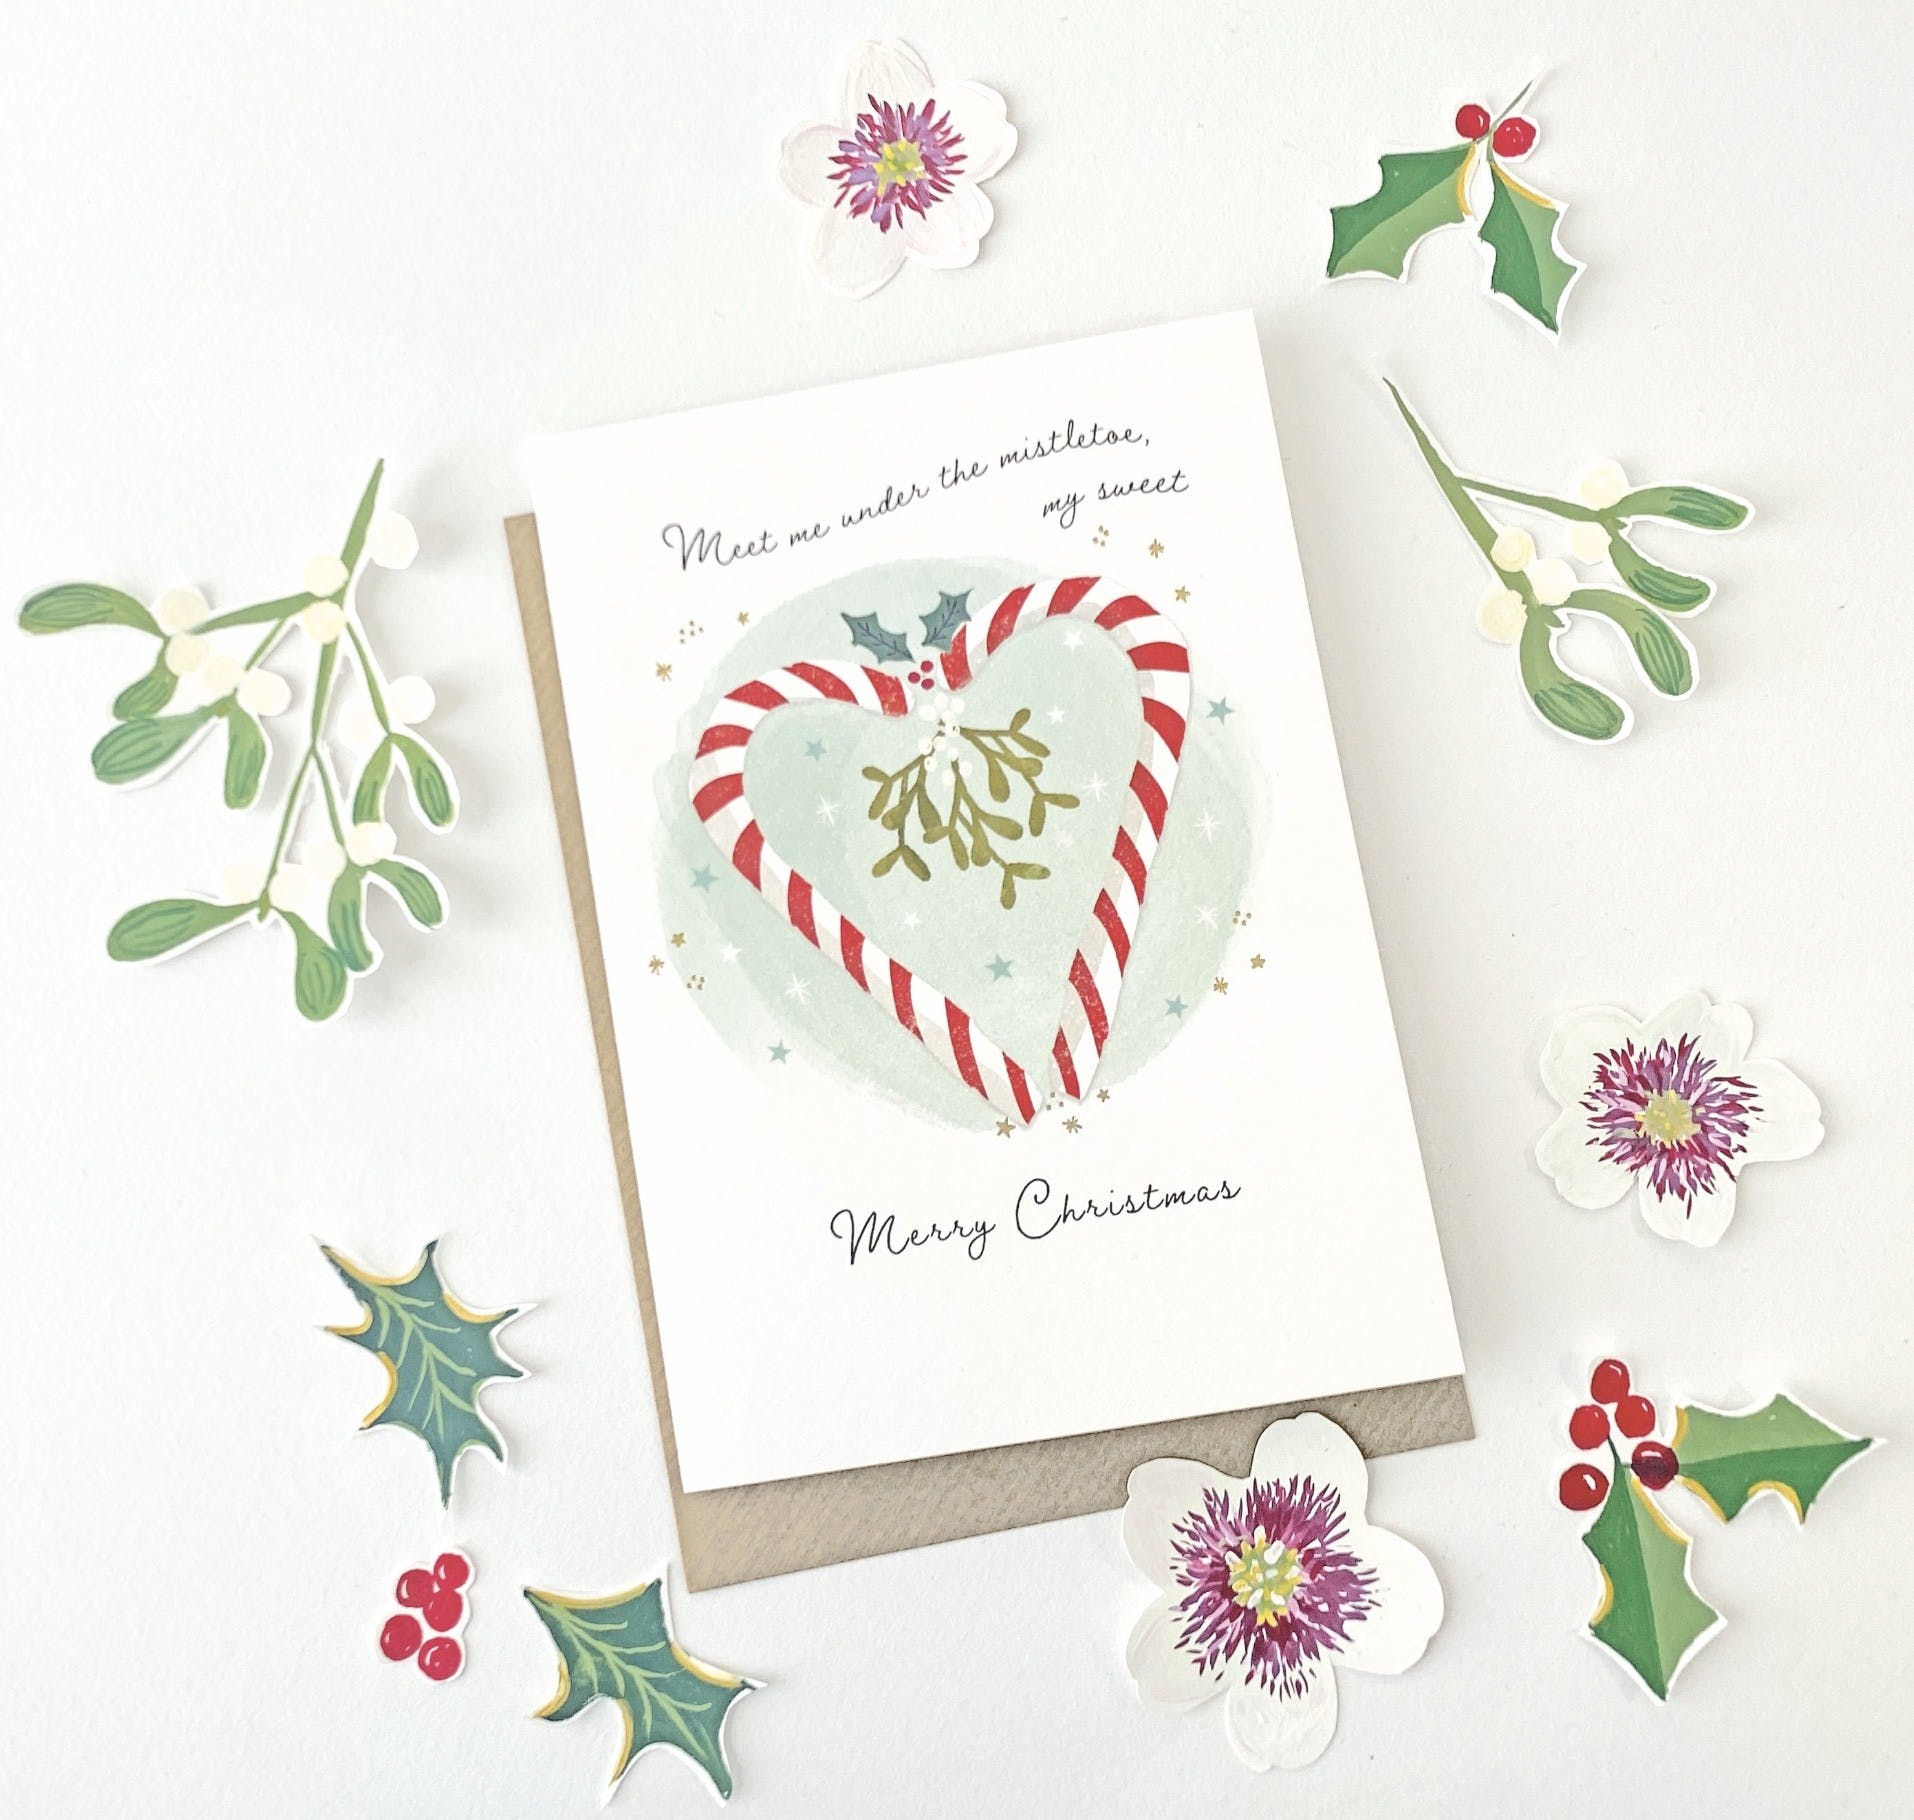 'Meet Me Under the Mistletoe'  Christmas Card by Emma Bryan Design